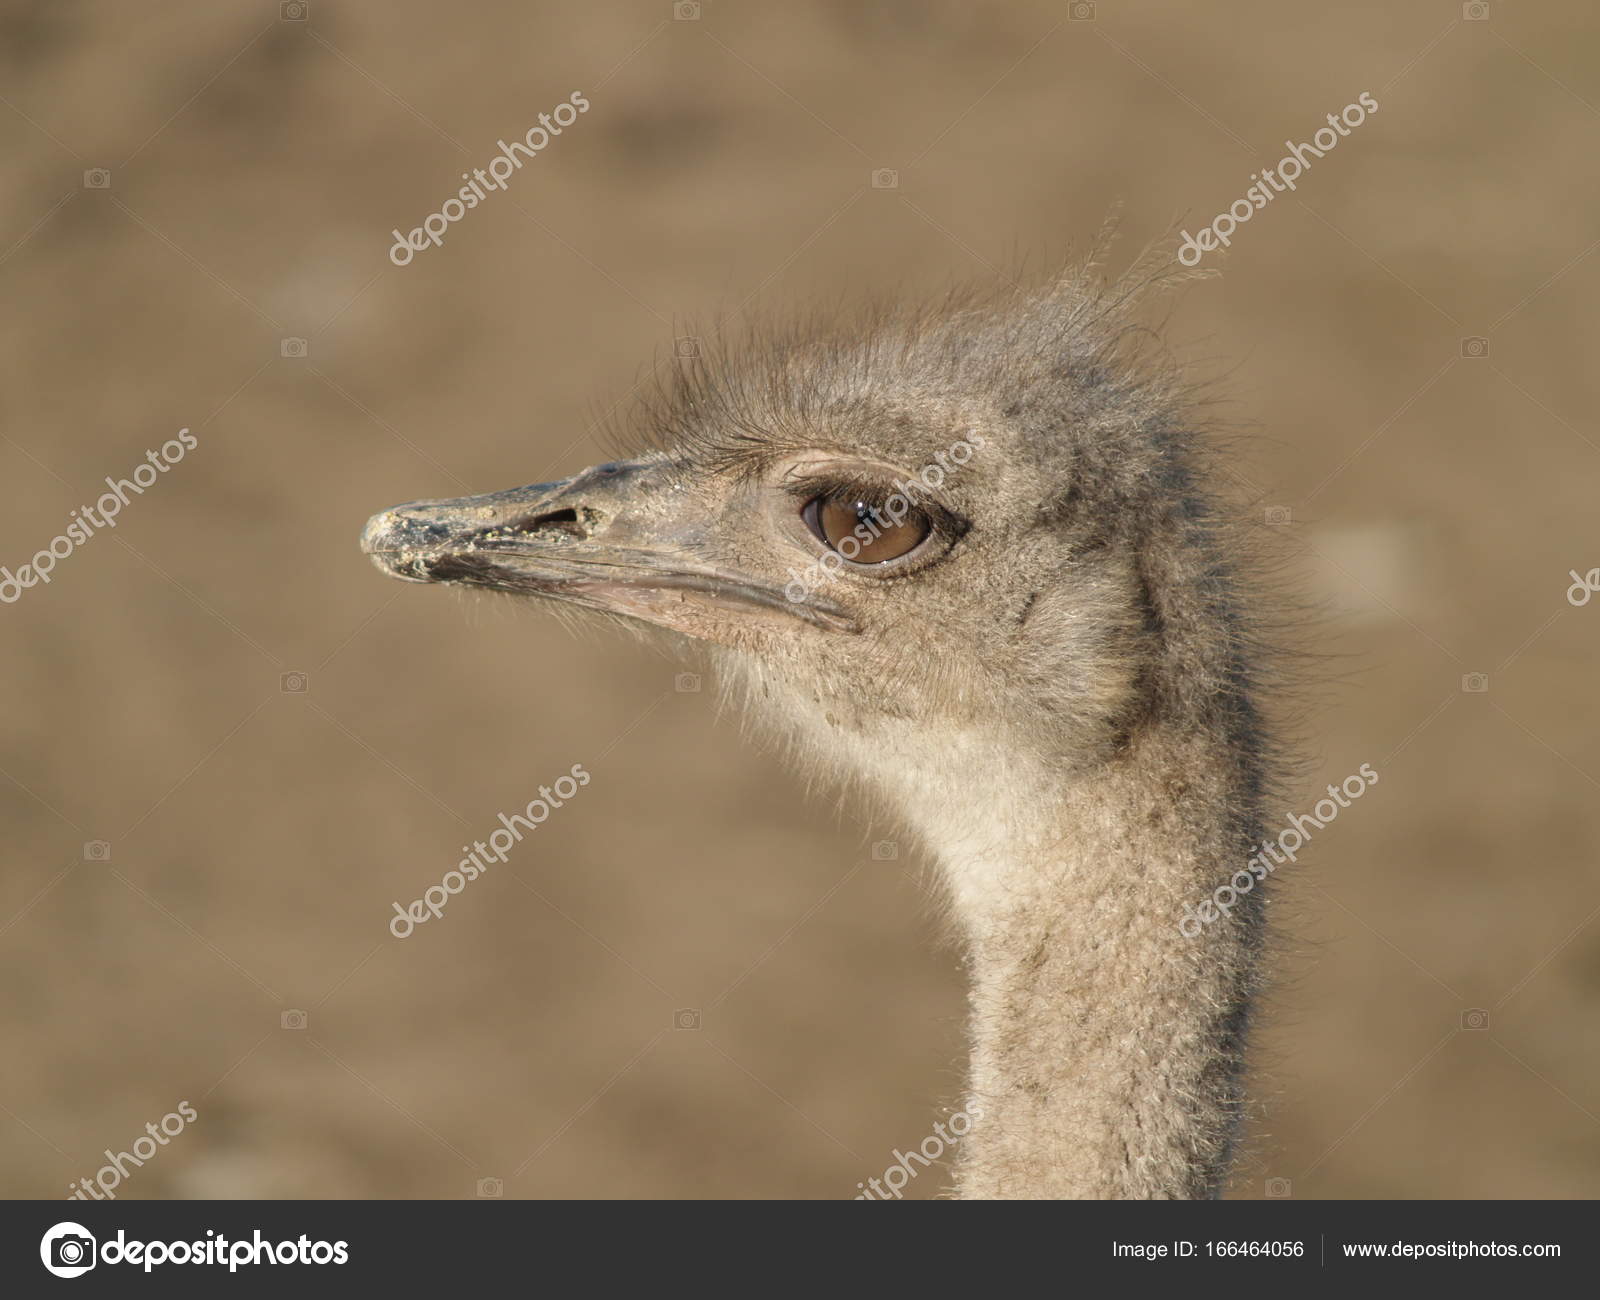 ostrich close-up — Stock Photo © maxim1717 #166464056